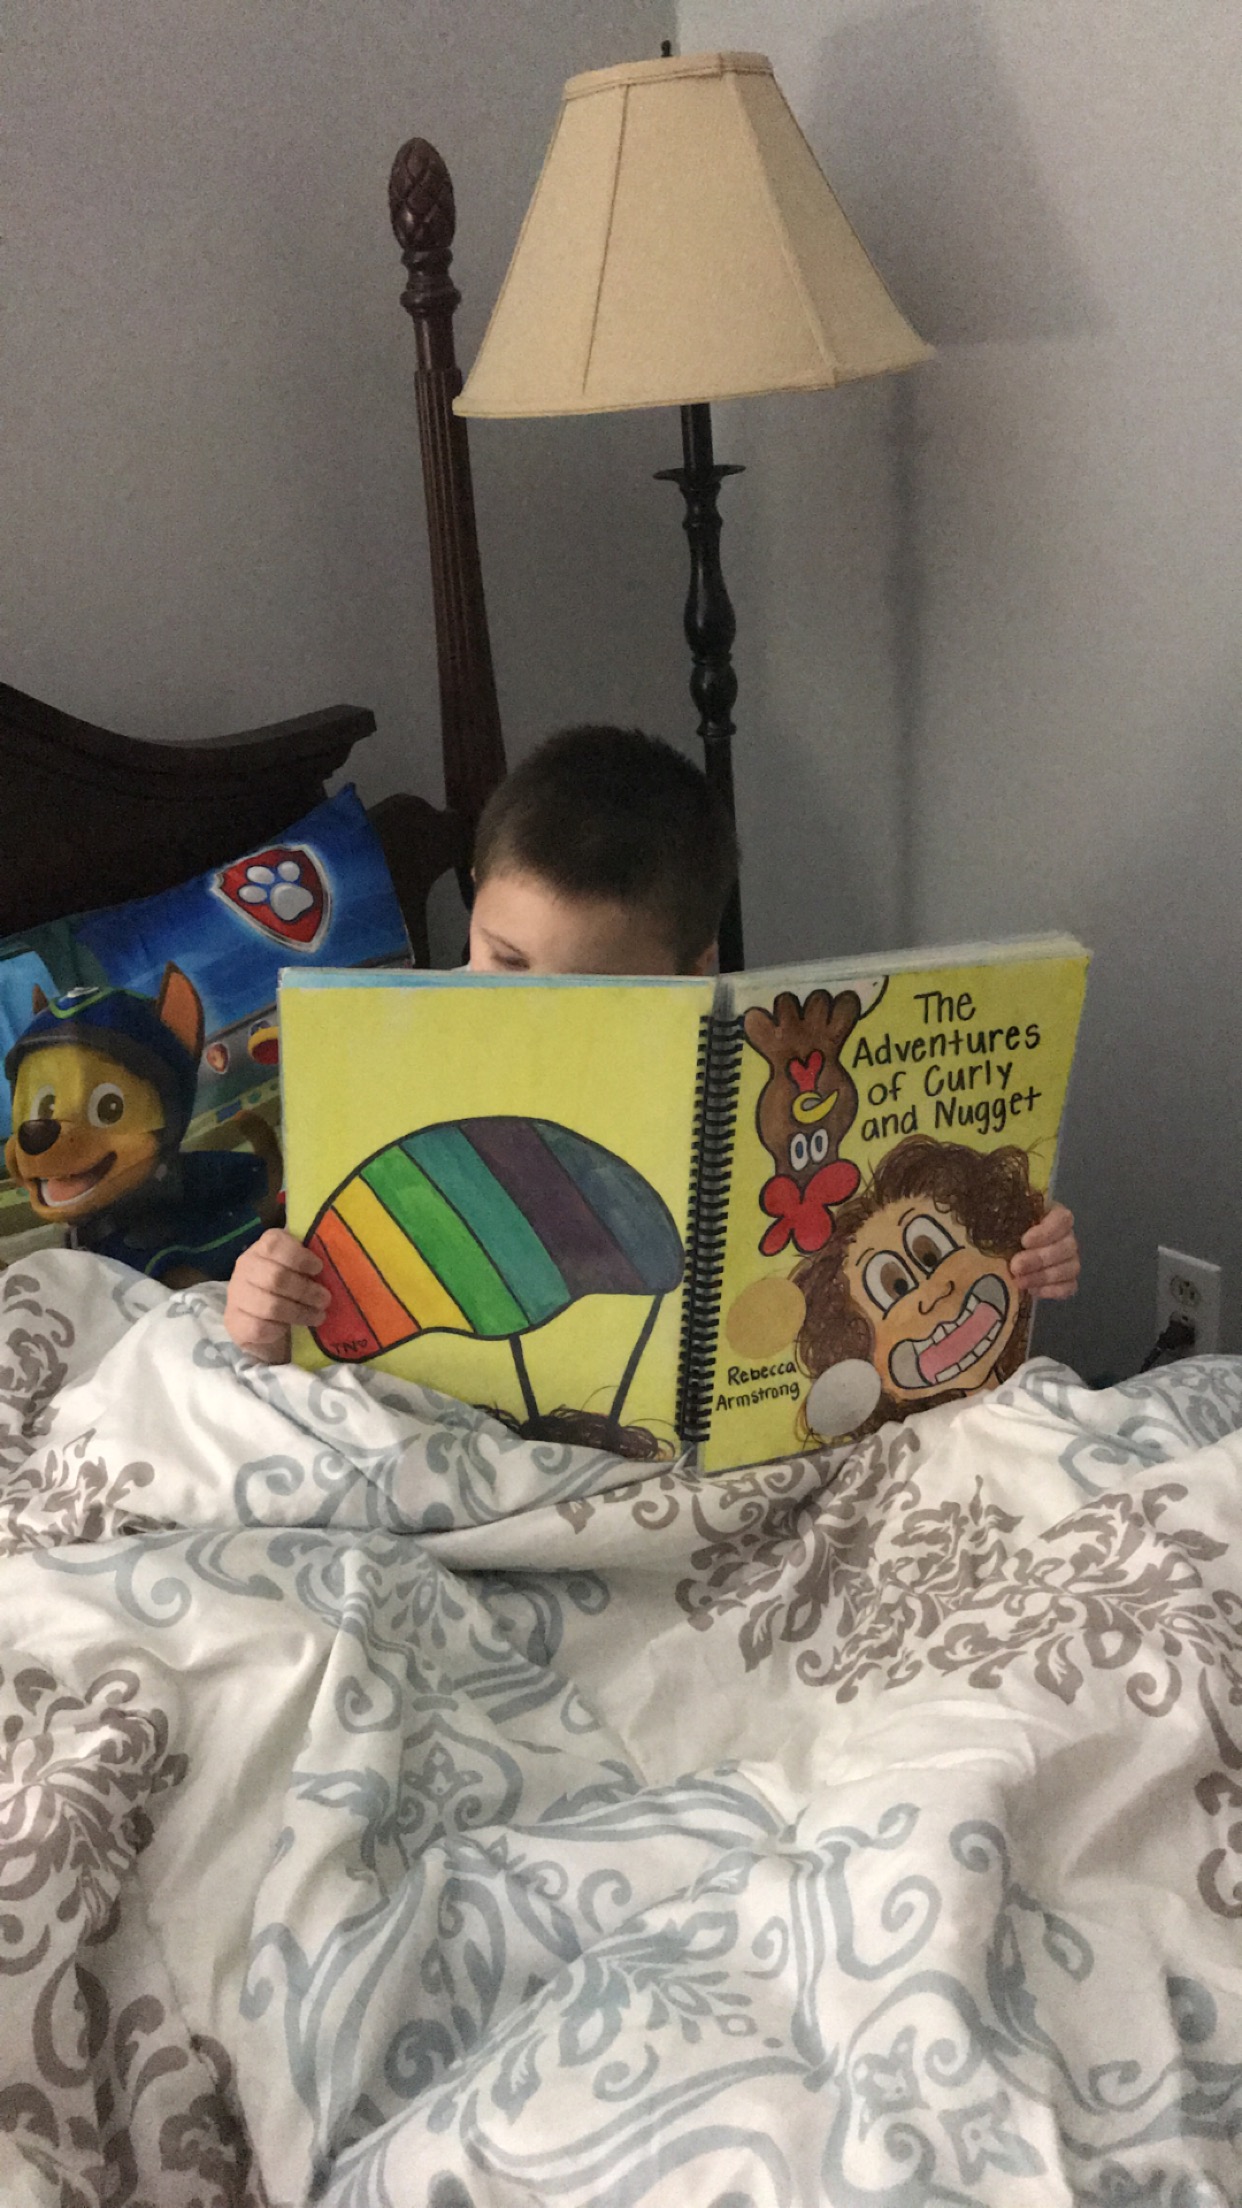 A young boy reads Rebecca's book